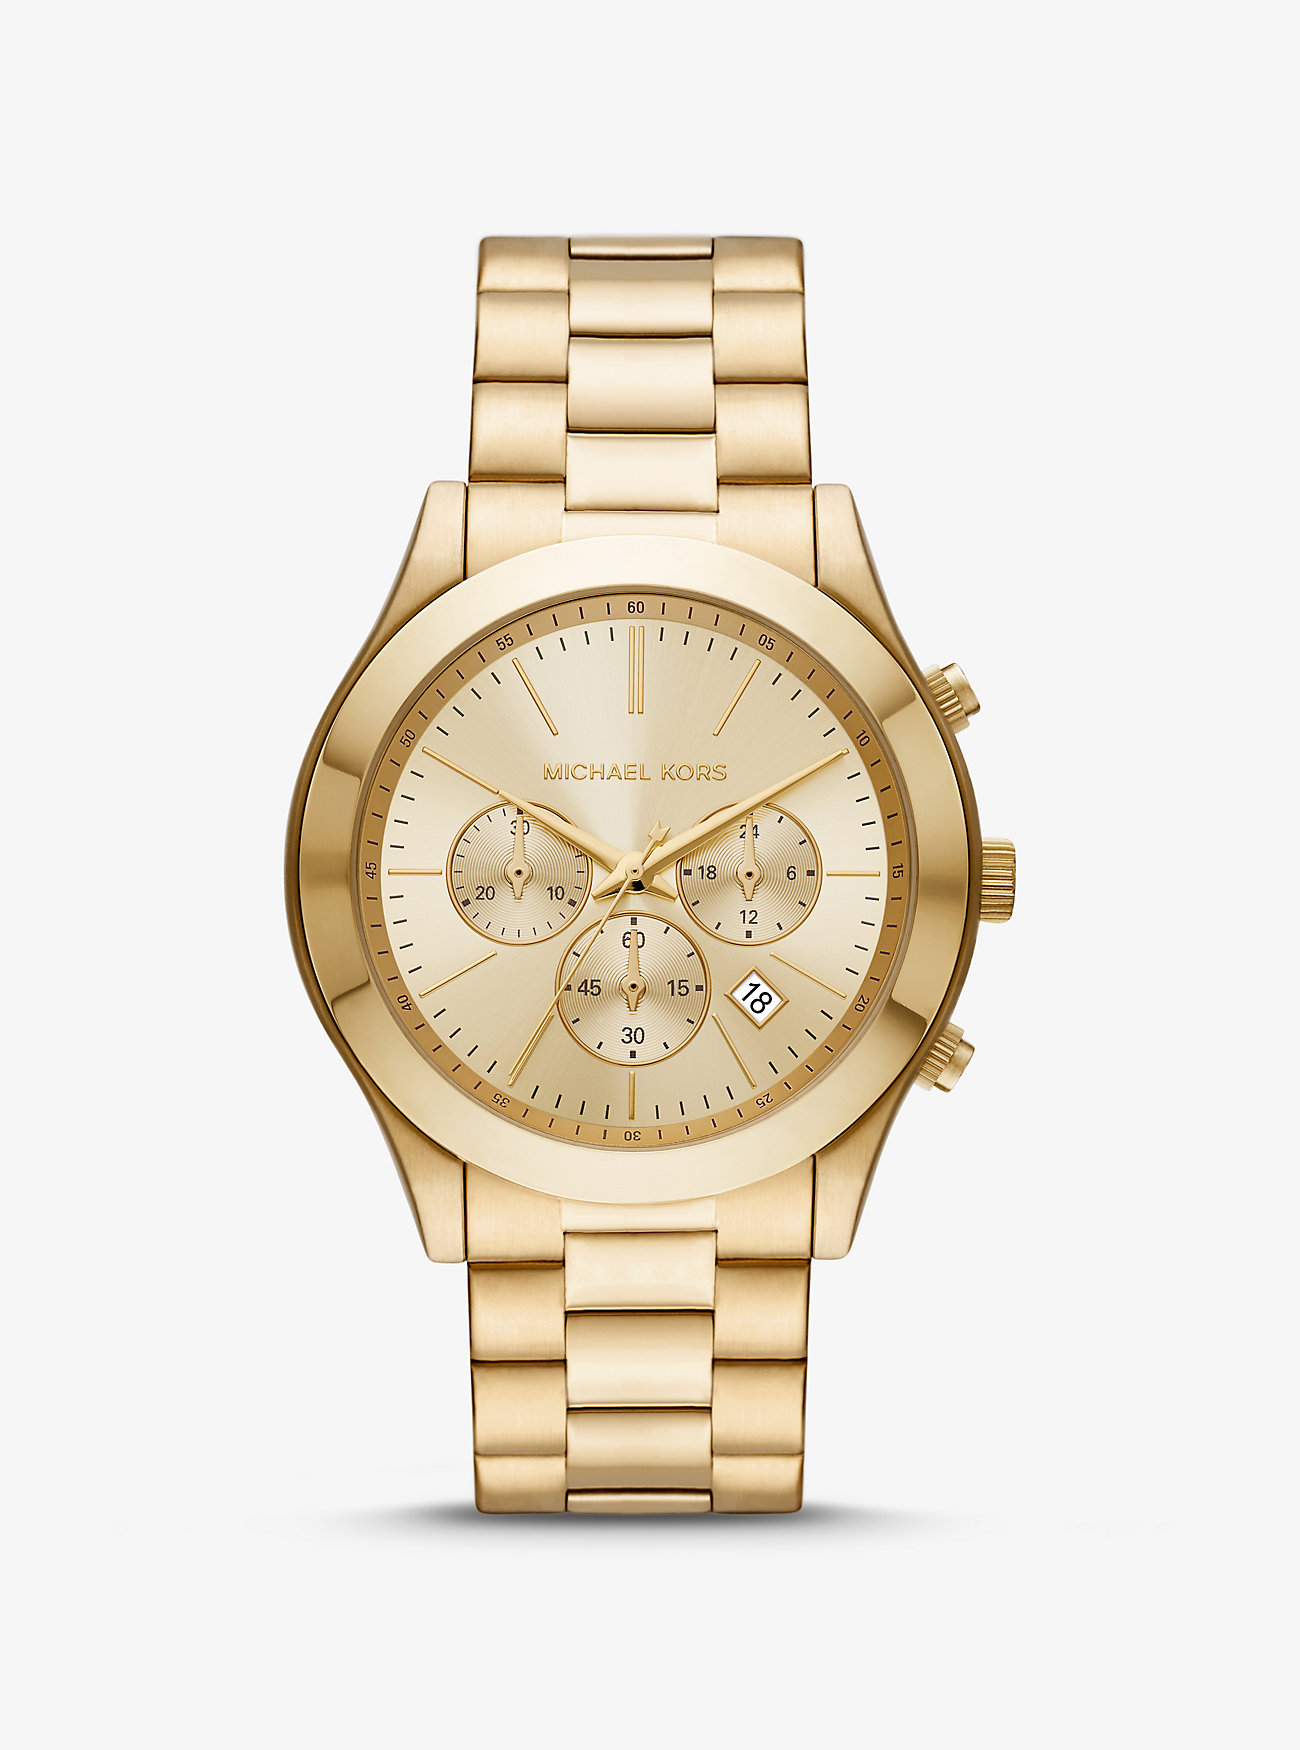 Michaelkors Oversized Slim Runway Gold-Tone Watch